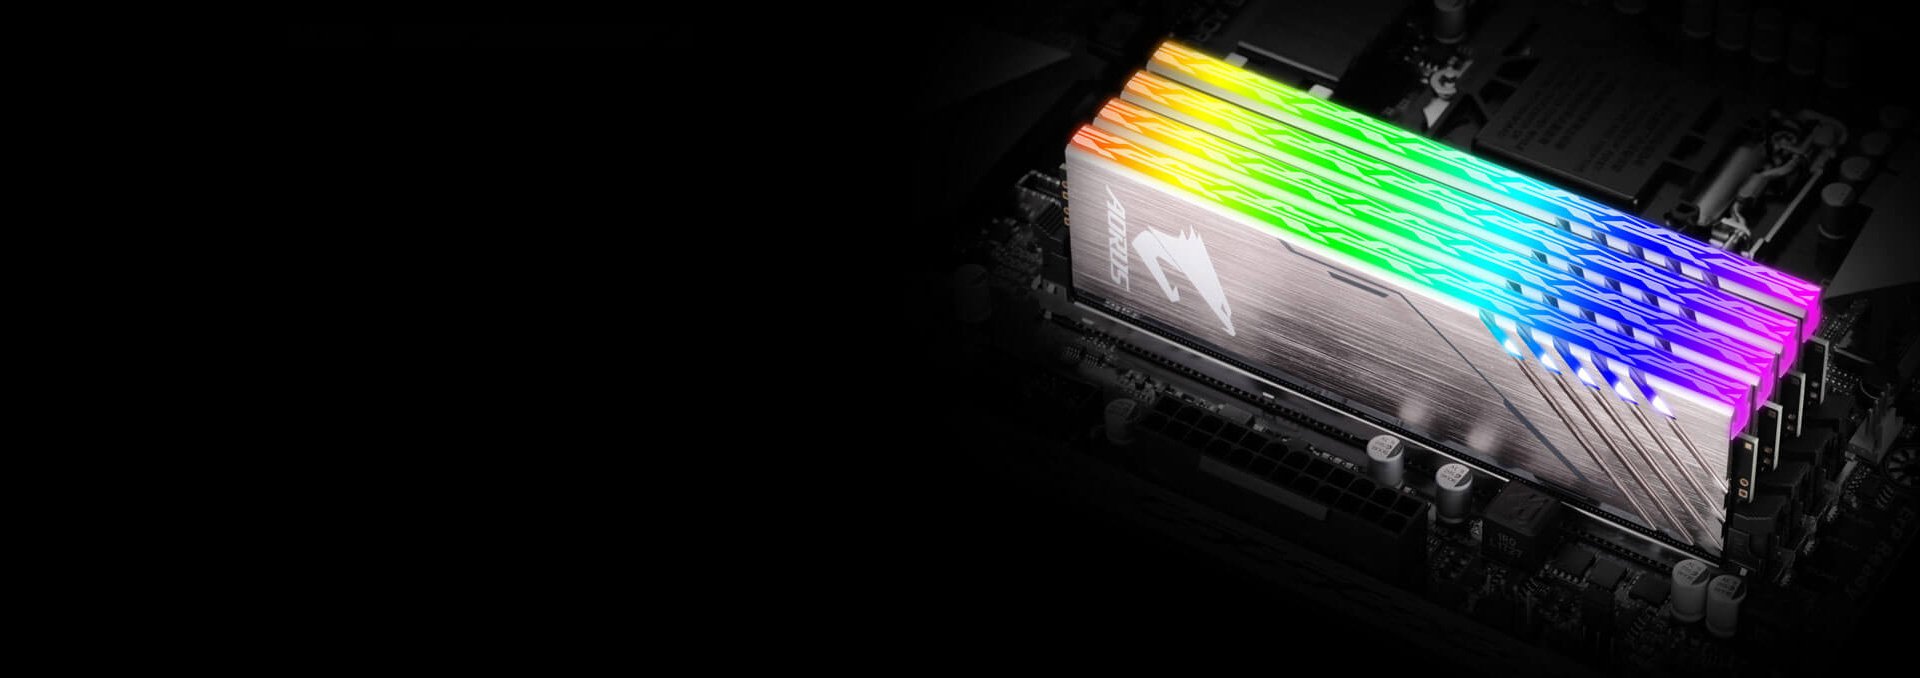 Four Stick of AORUS-Branded RGB Lit Memory Modules